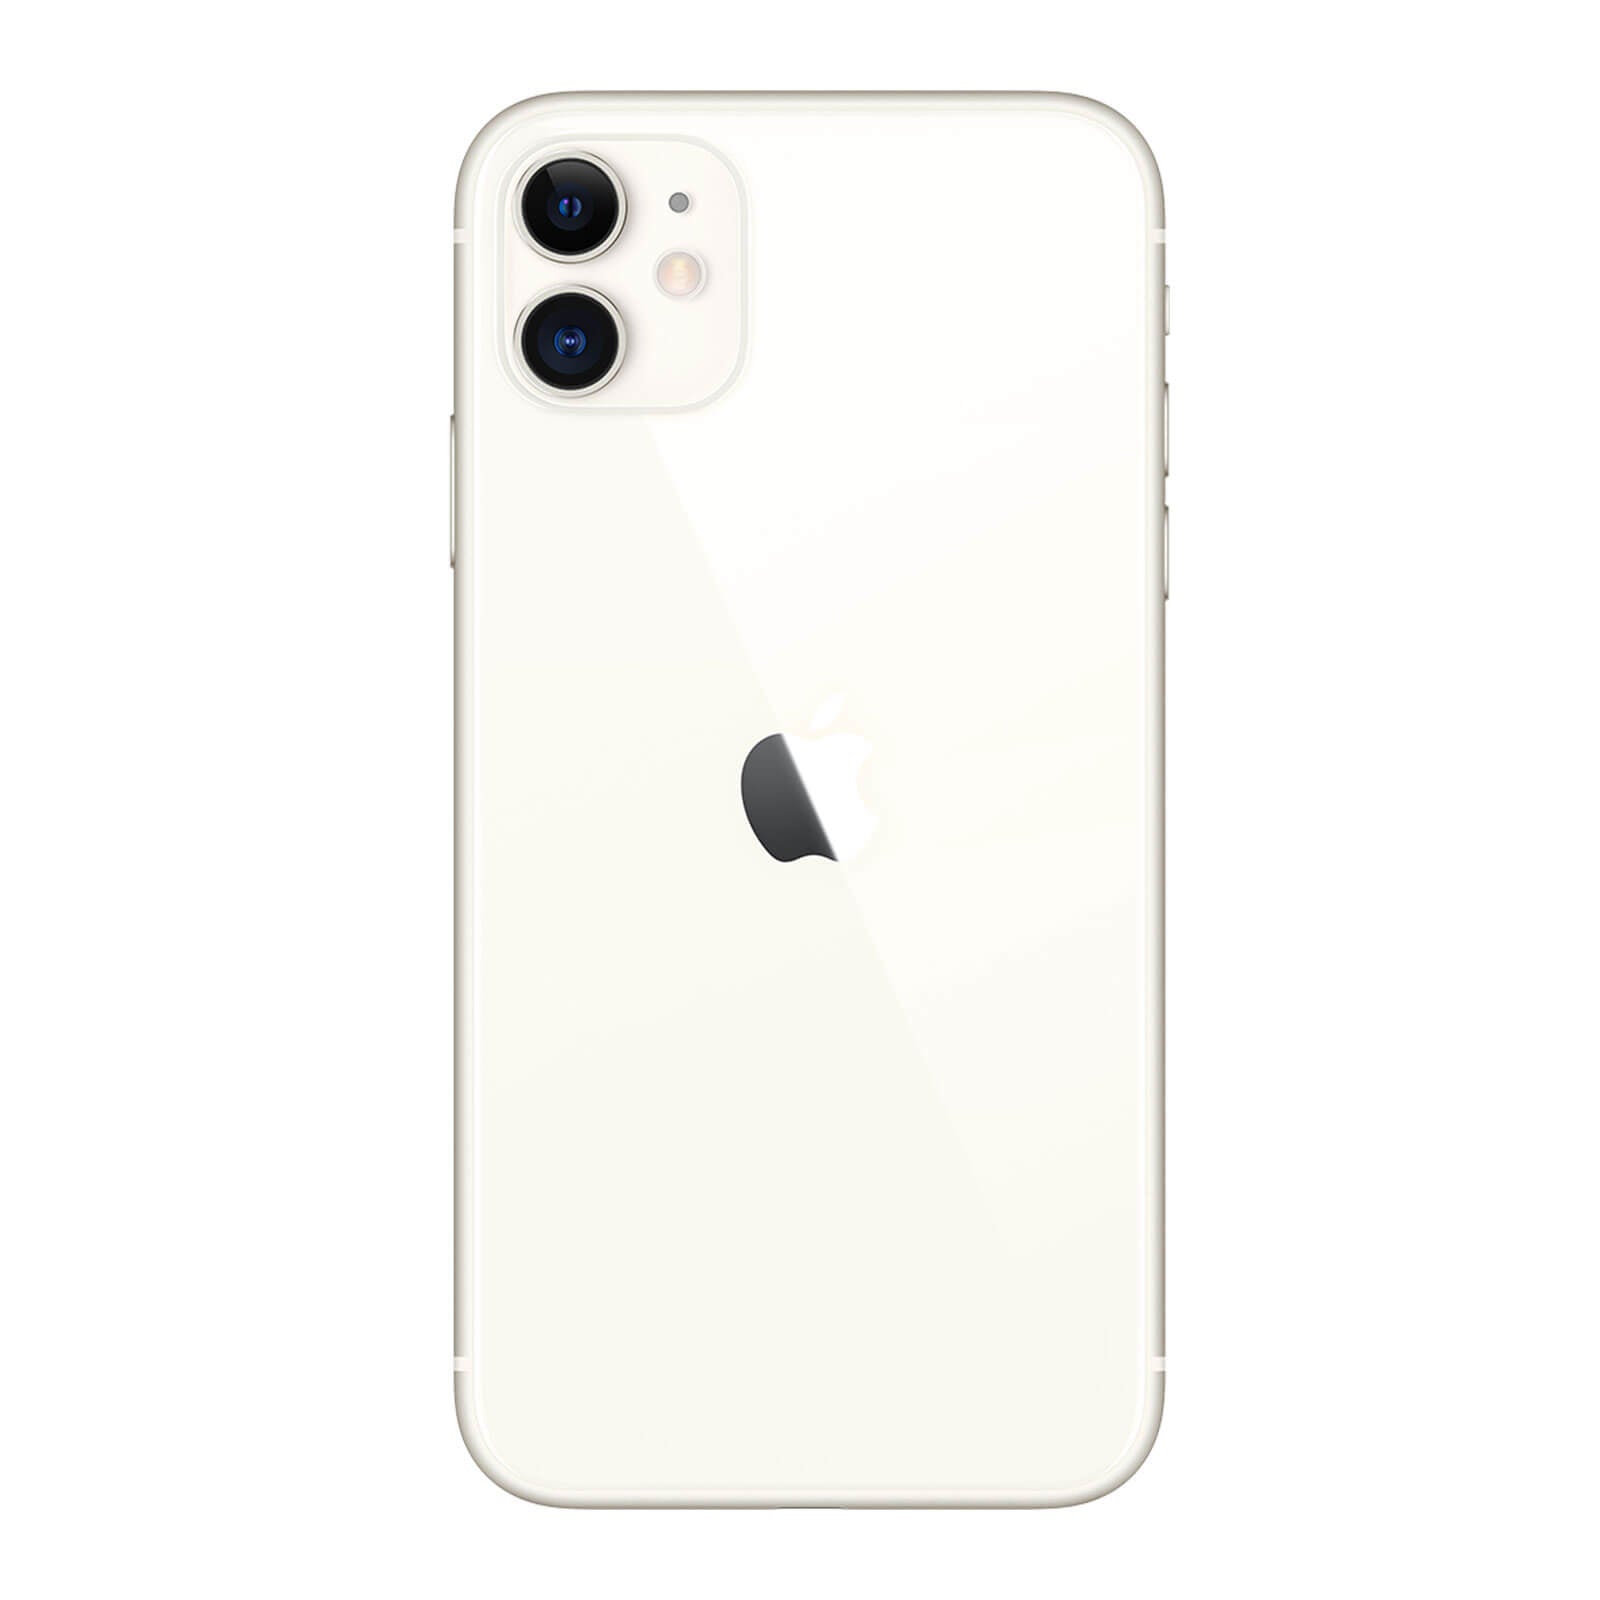 Apple iPhone 11 64GB White Good - Unlocked